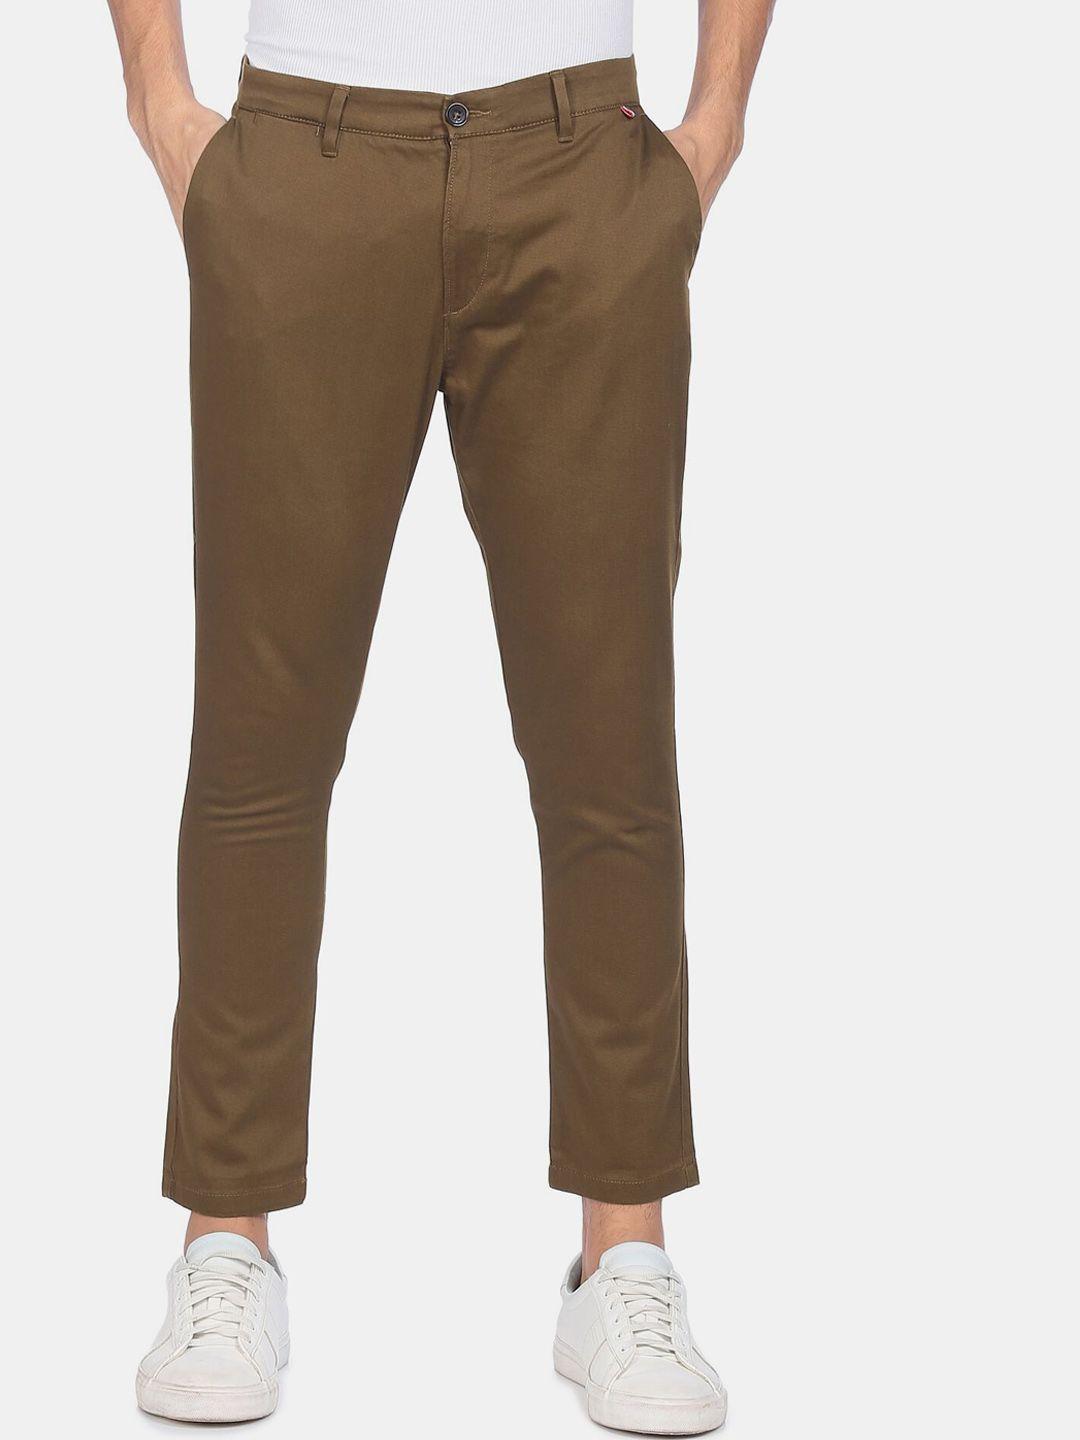 u.s. polo assn. men brown trousers